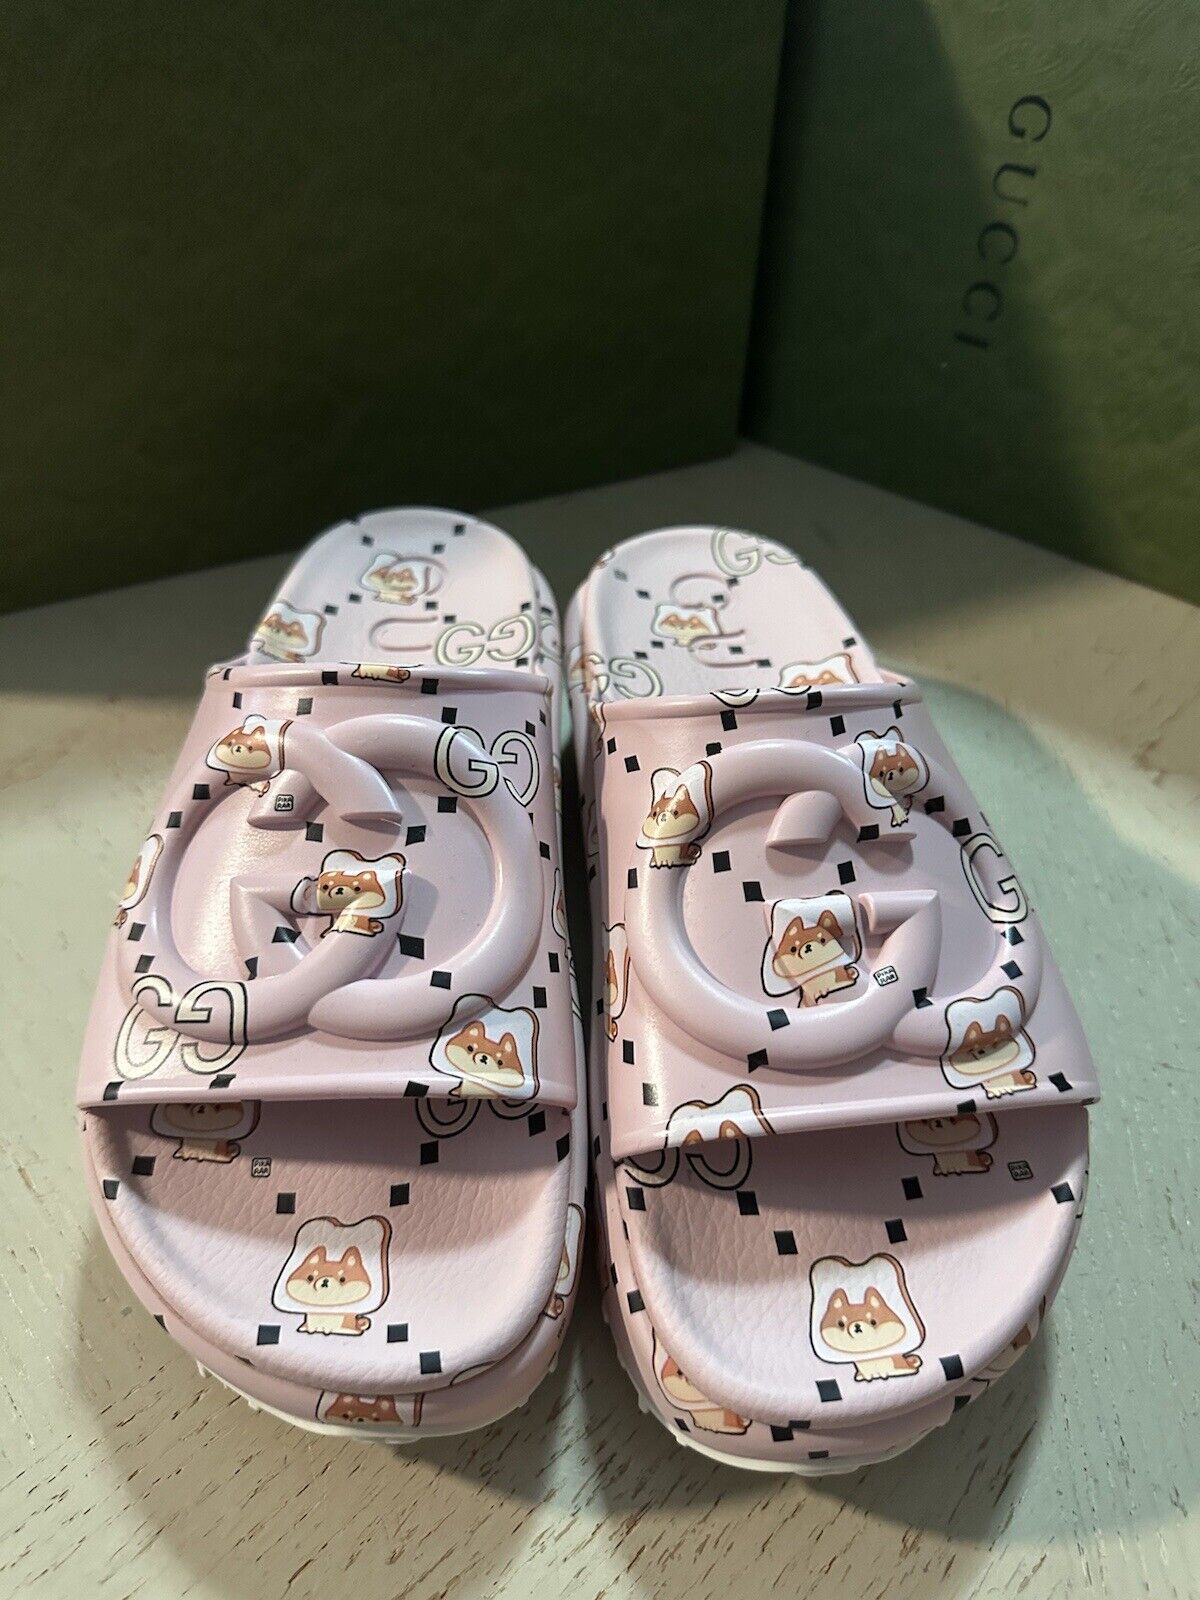 Gucci Women’s Sandal Shoes Pink/Multi 6 US ( 36 Eu ) 737926 New